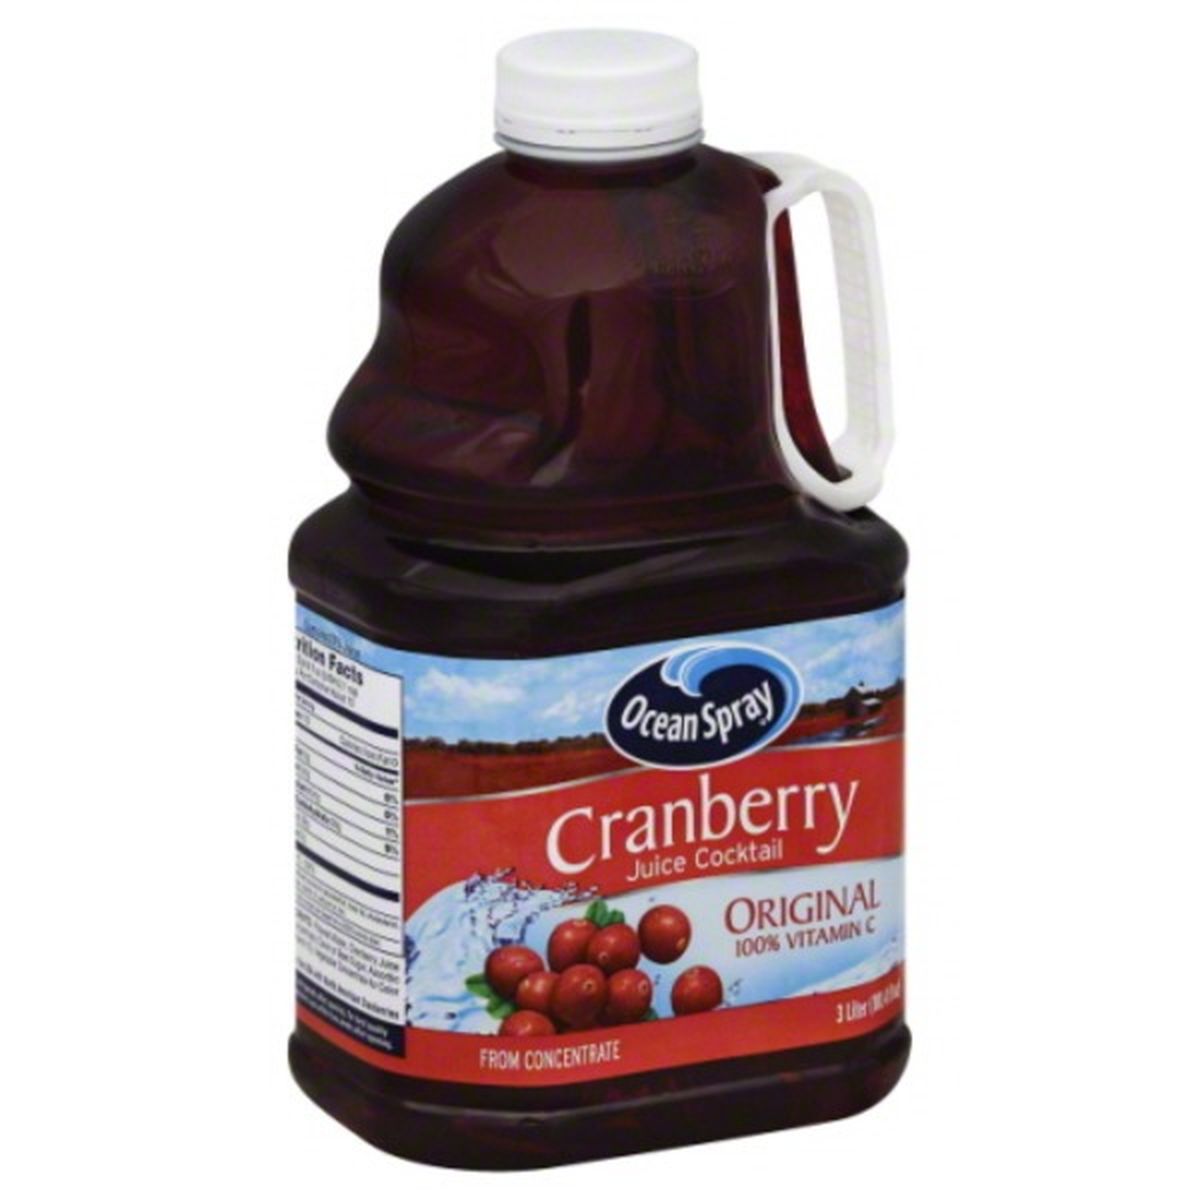 Calories in Ocean Spray Juice Cocktail, Cranberry